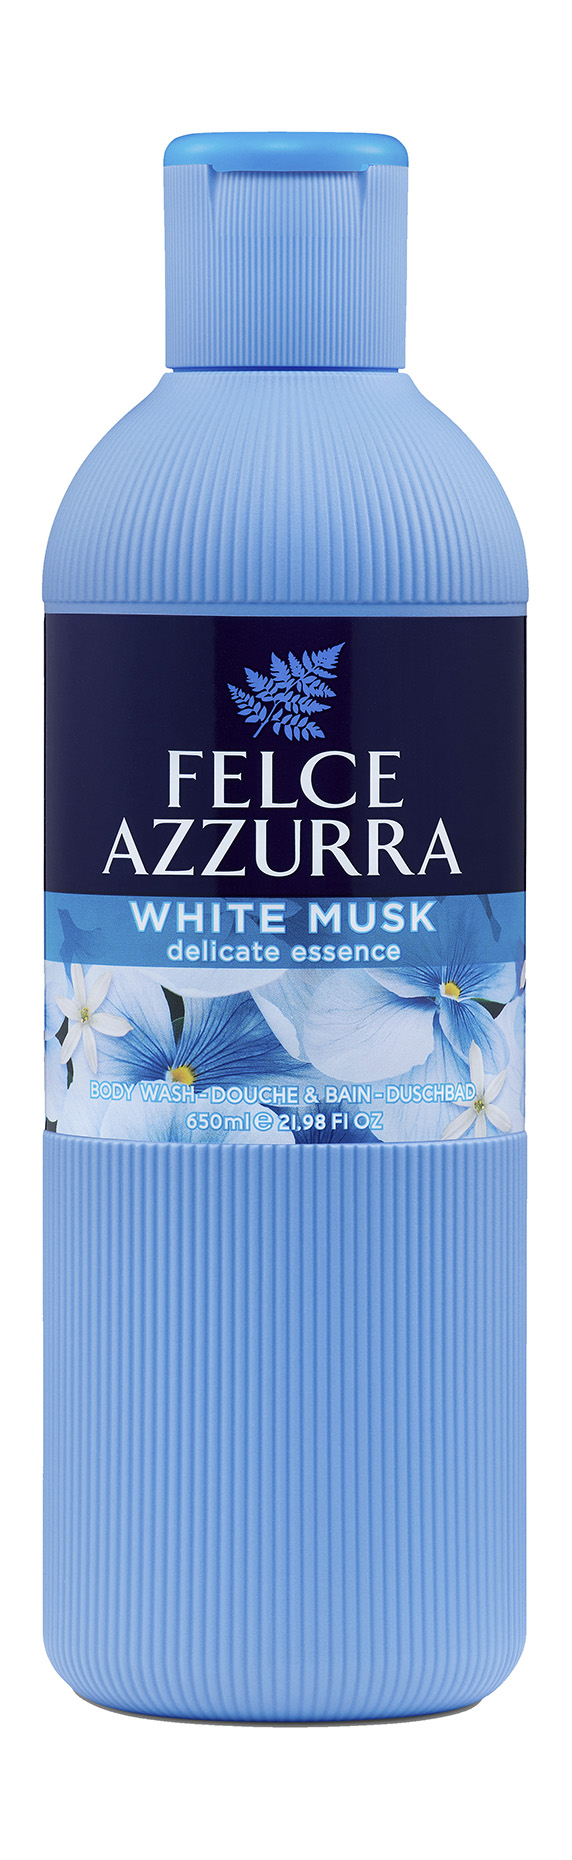 Гель для душа Felce Azzurra White Musk Delicate Essence парфюмированный, 650 мл iq beauty 098 гель лак каучуковый с кальцием delicate intimacy 10 мл